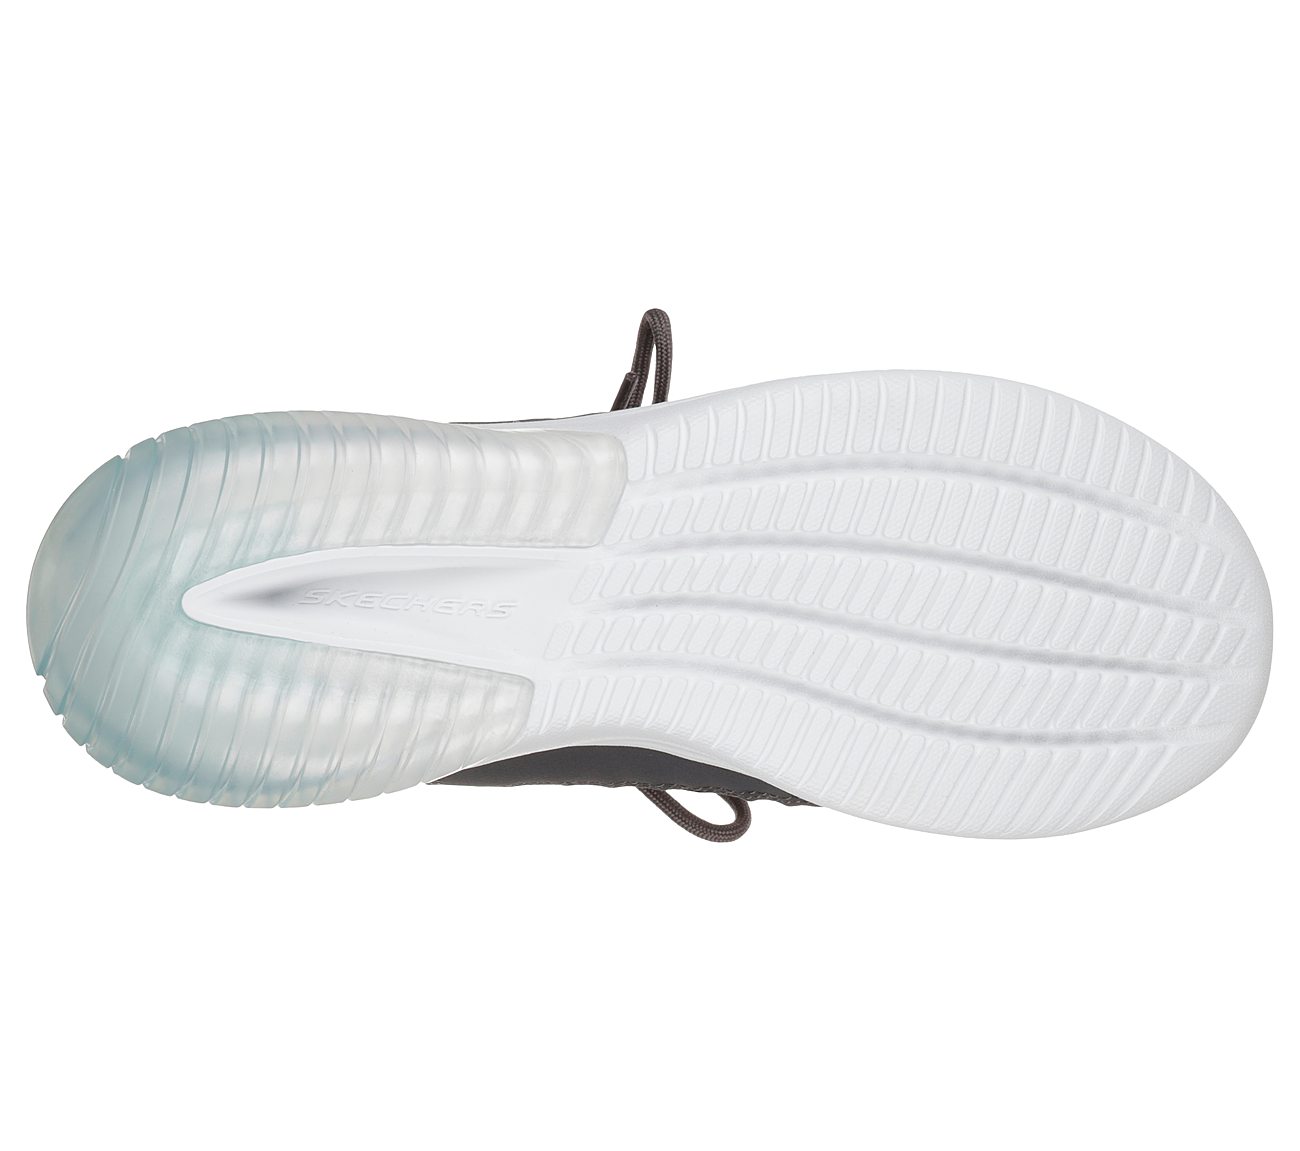 SKECH-AIR ULTRA FLEX-LITE BRE, CHARCOAL/AQUA Footwear Bottom View